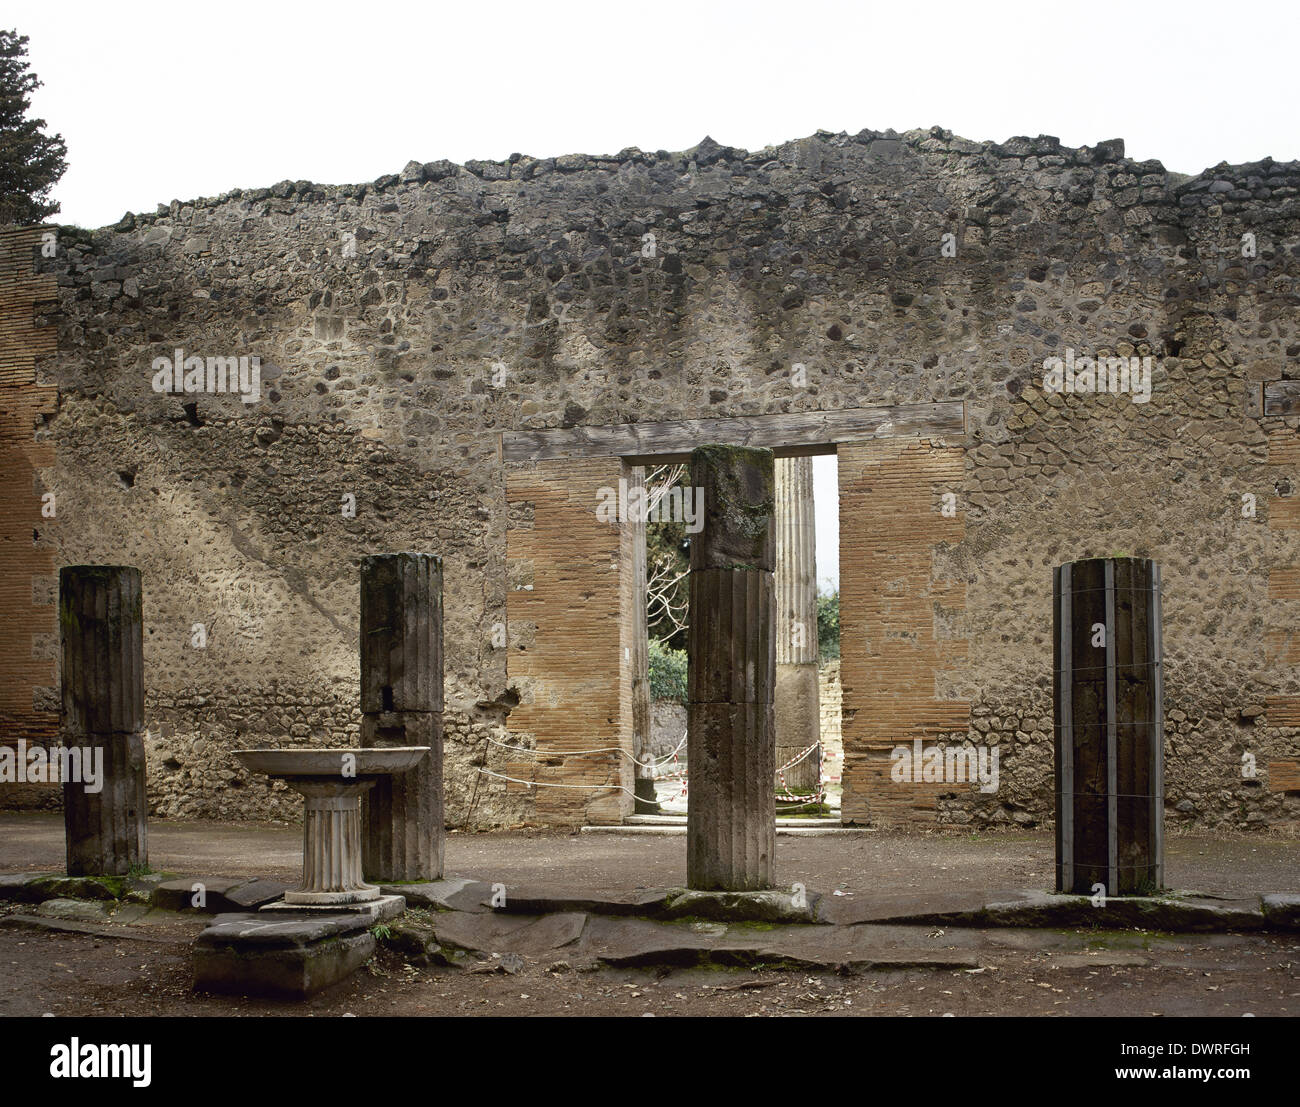 Italy. Pompeii. Triangular Forum. Fluted columns inside the square, Doric style. Stock Photo